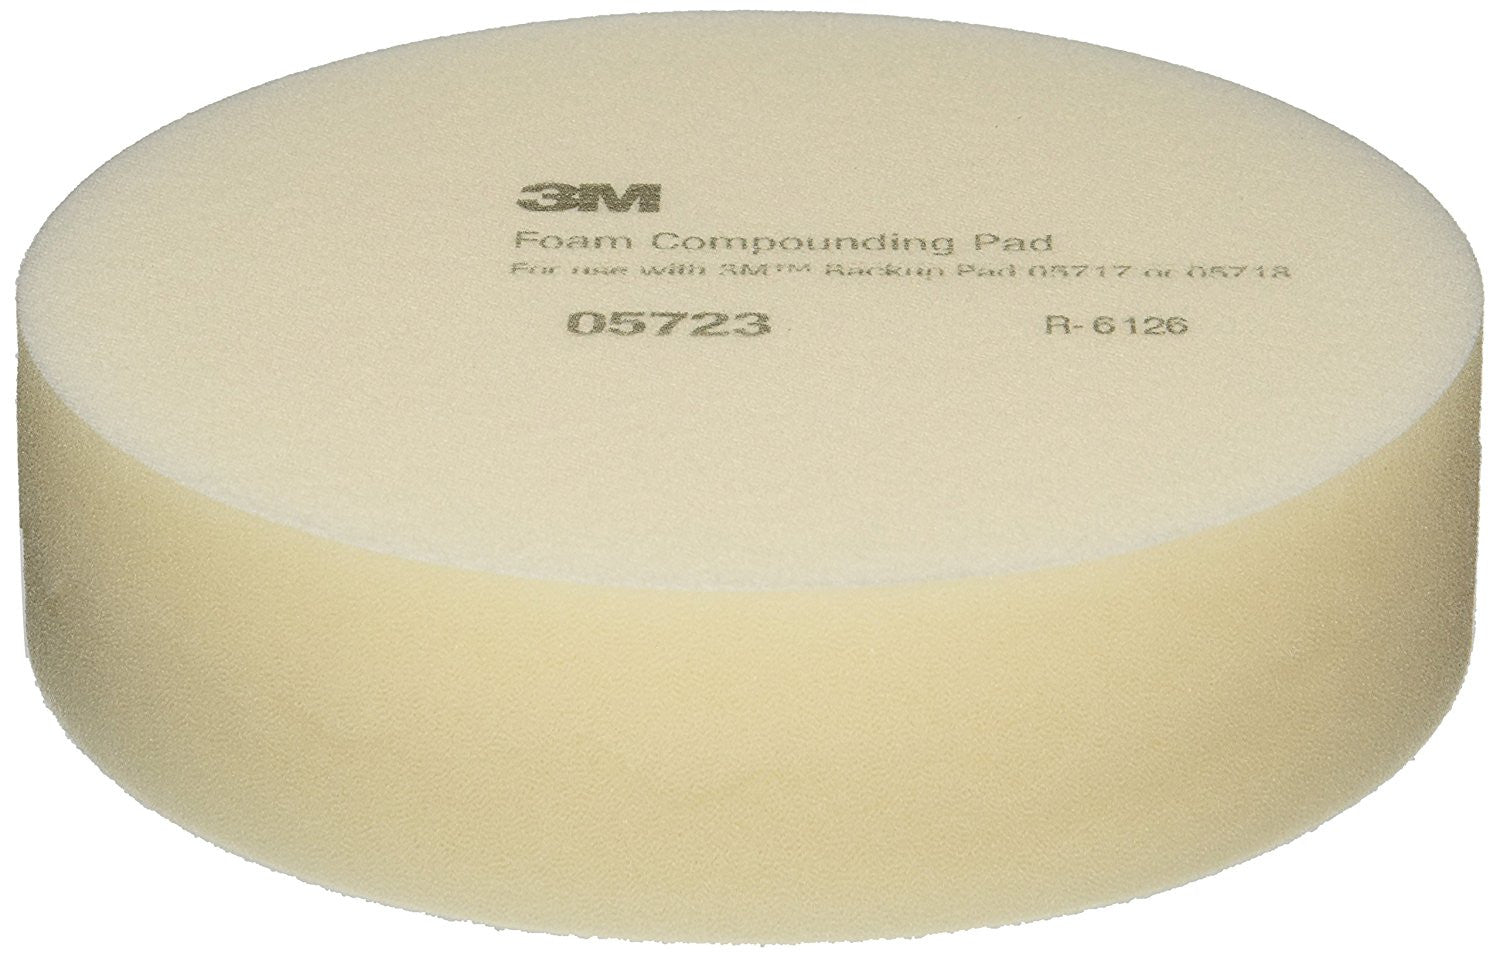 Pack of 3M™ Automotive Refinish Yellow Masking Tape, 3/4, 1.5, 2 –